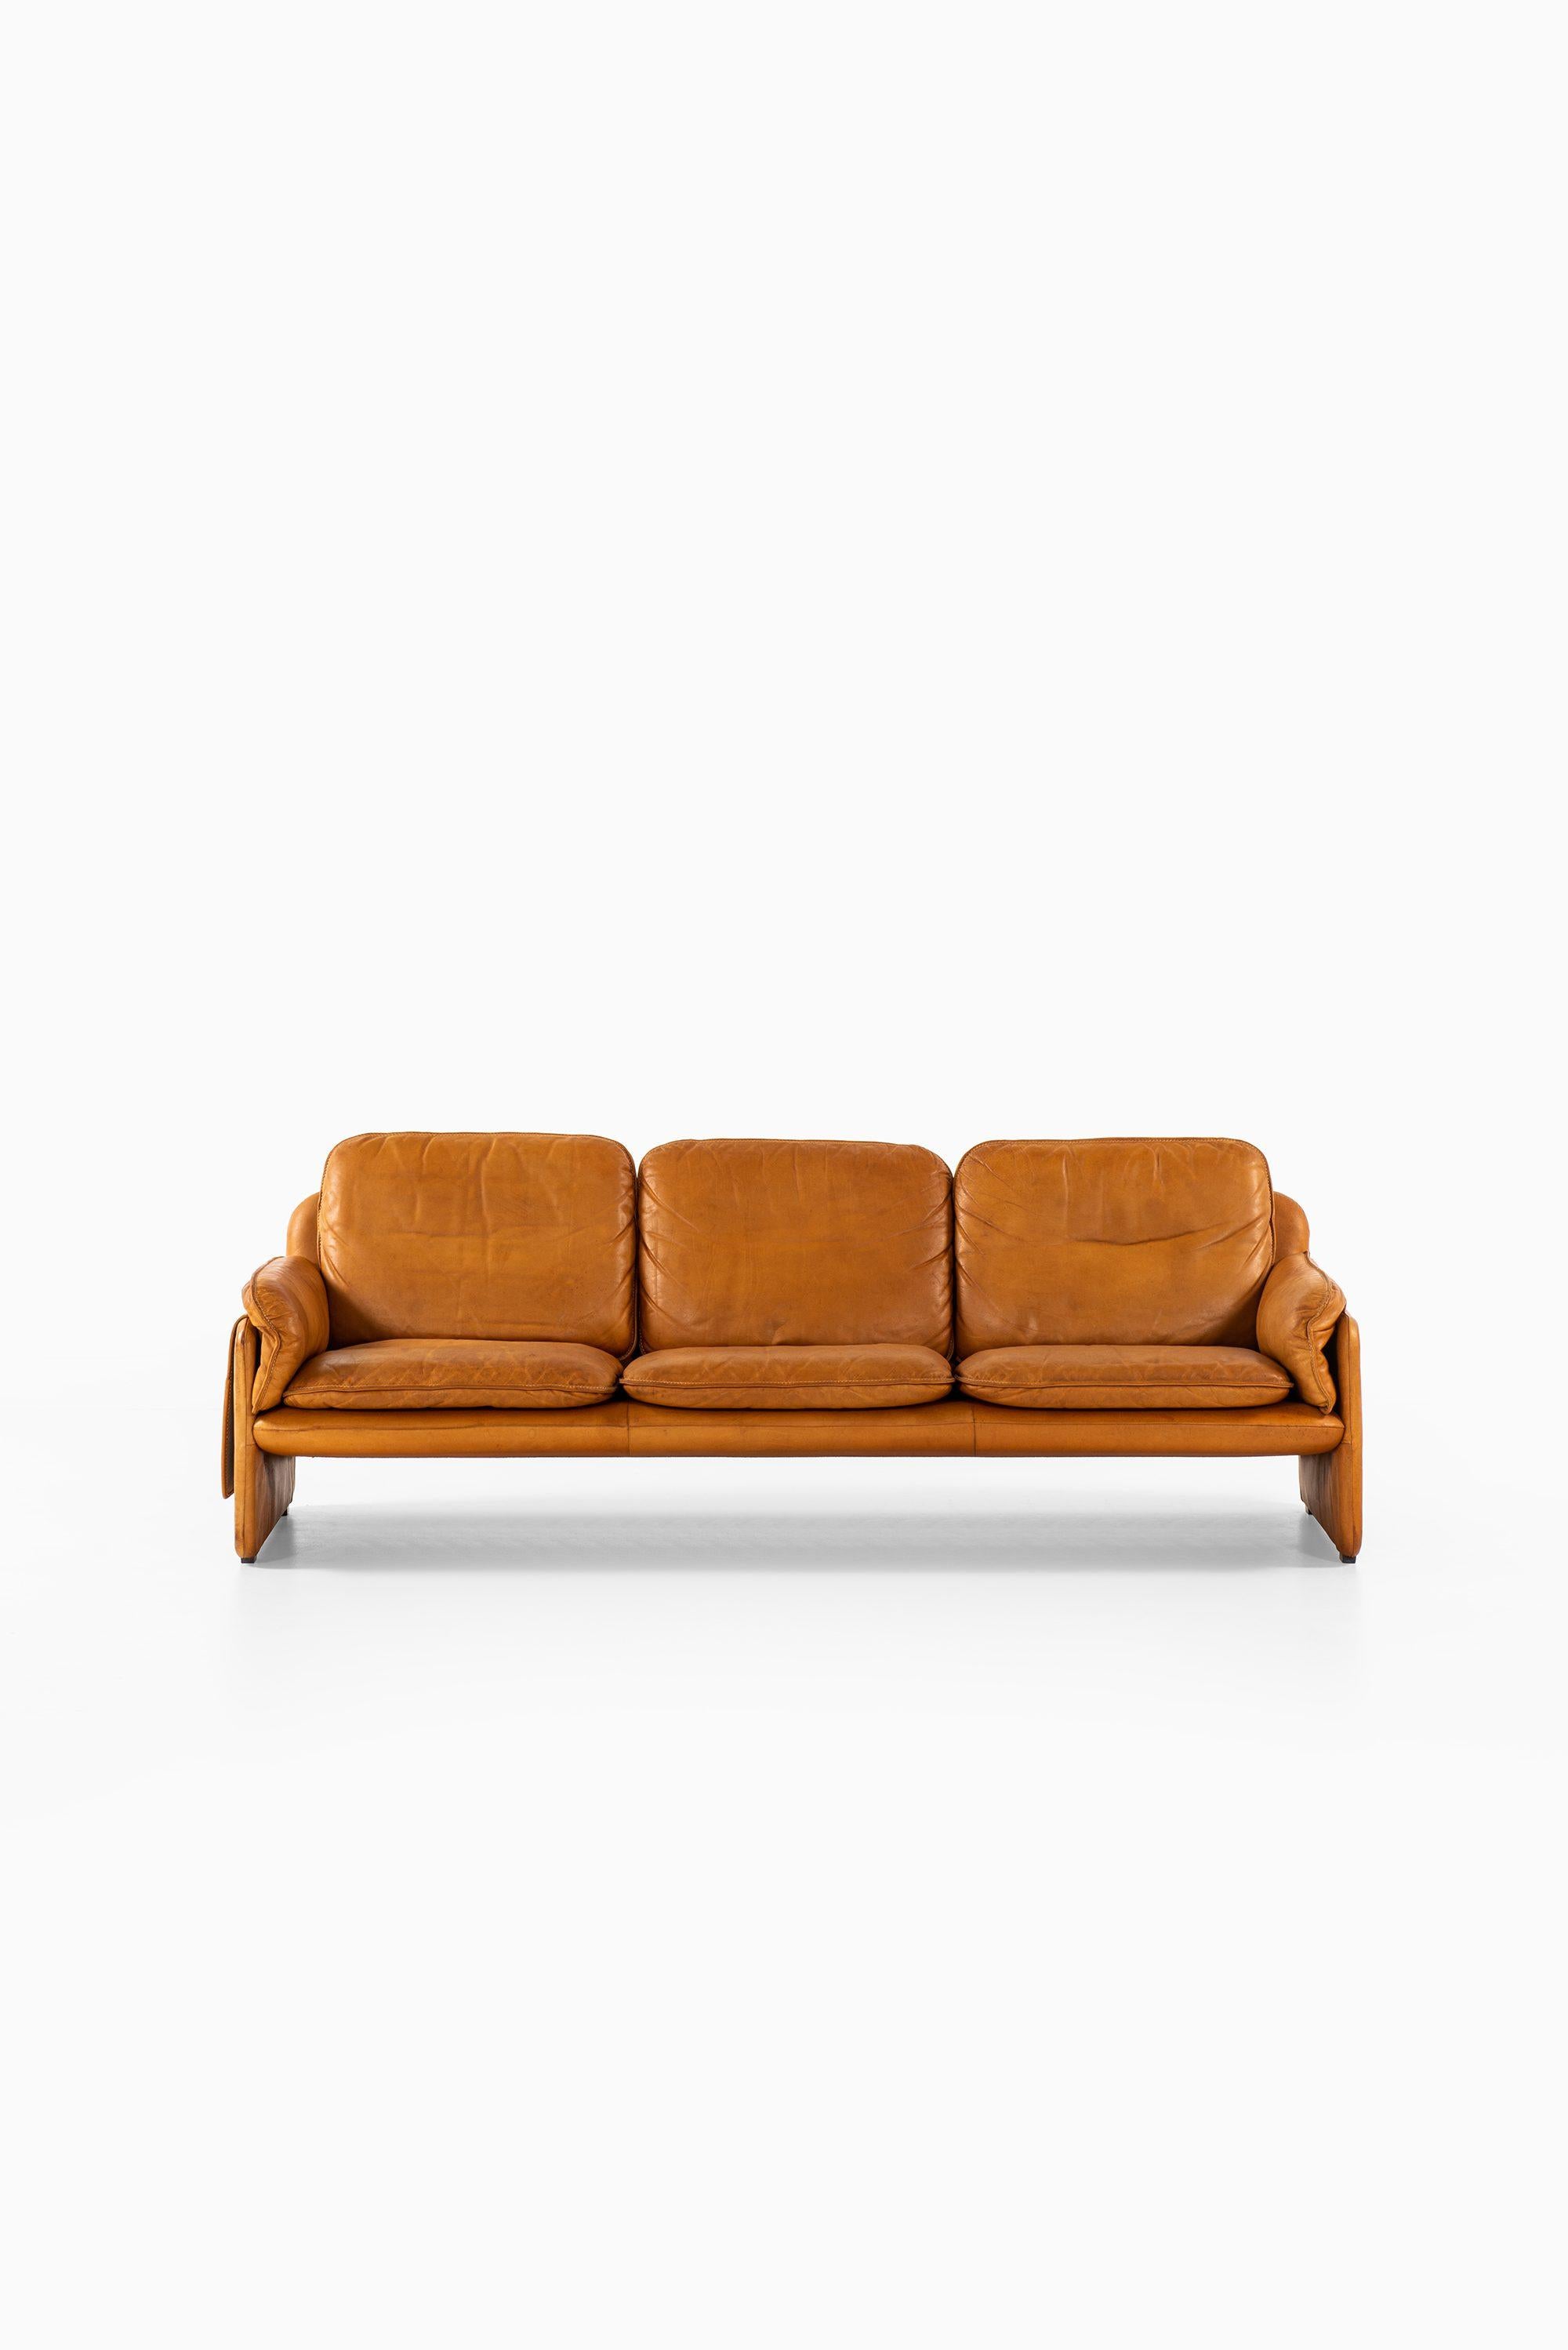 Rare sofa model DS-61. Produced by De Sede in Switzerland.